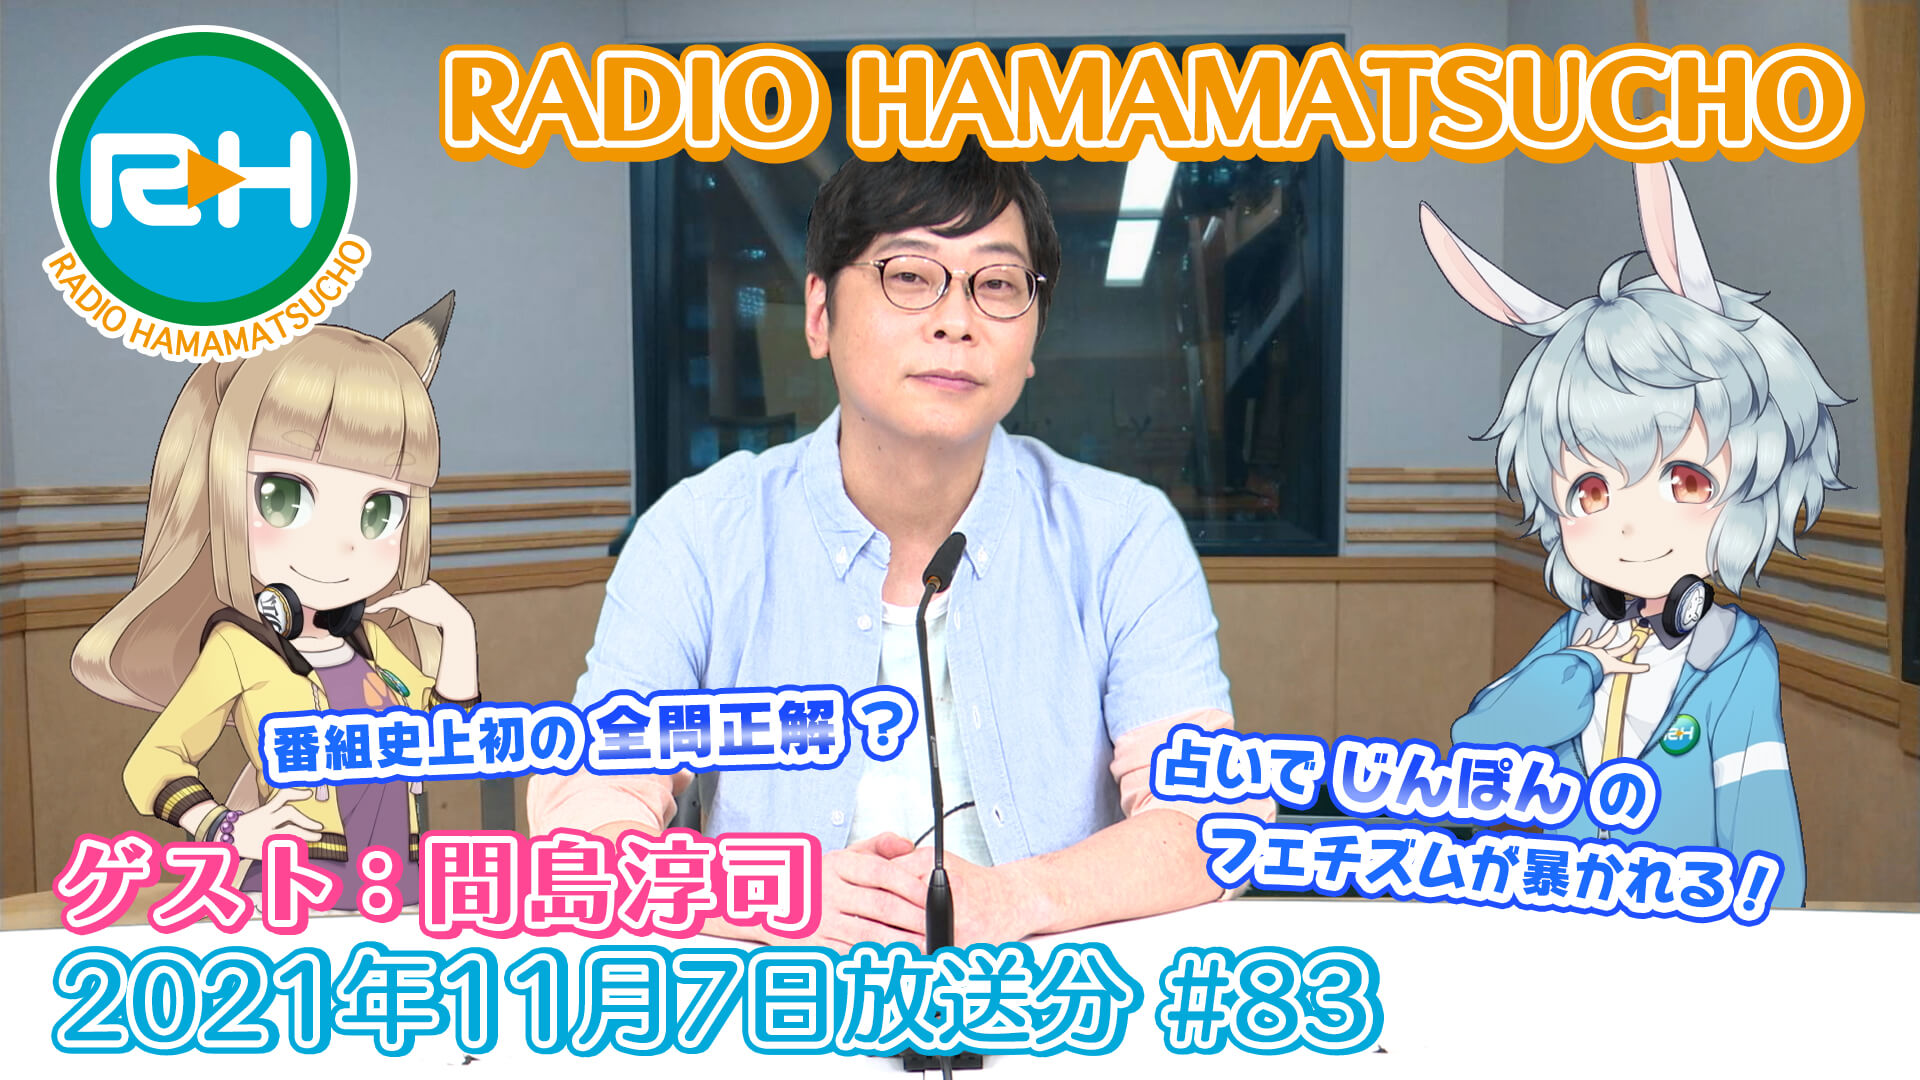 RADIO HAMAMATSUCHO 第83回 (2021年11月7日放送分) ゲスト: 間島淳司